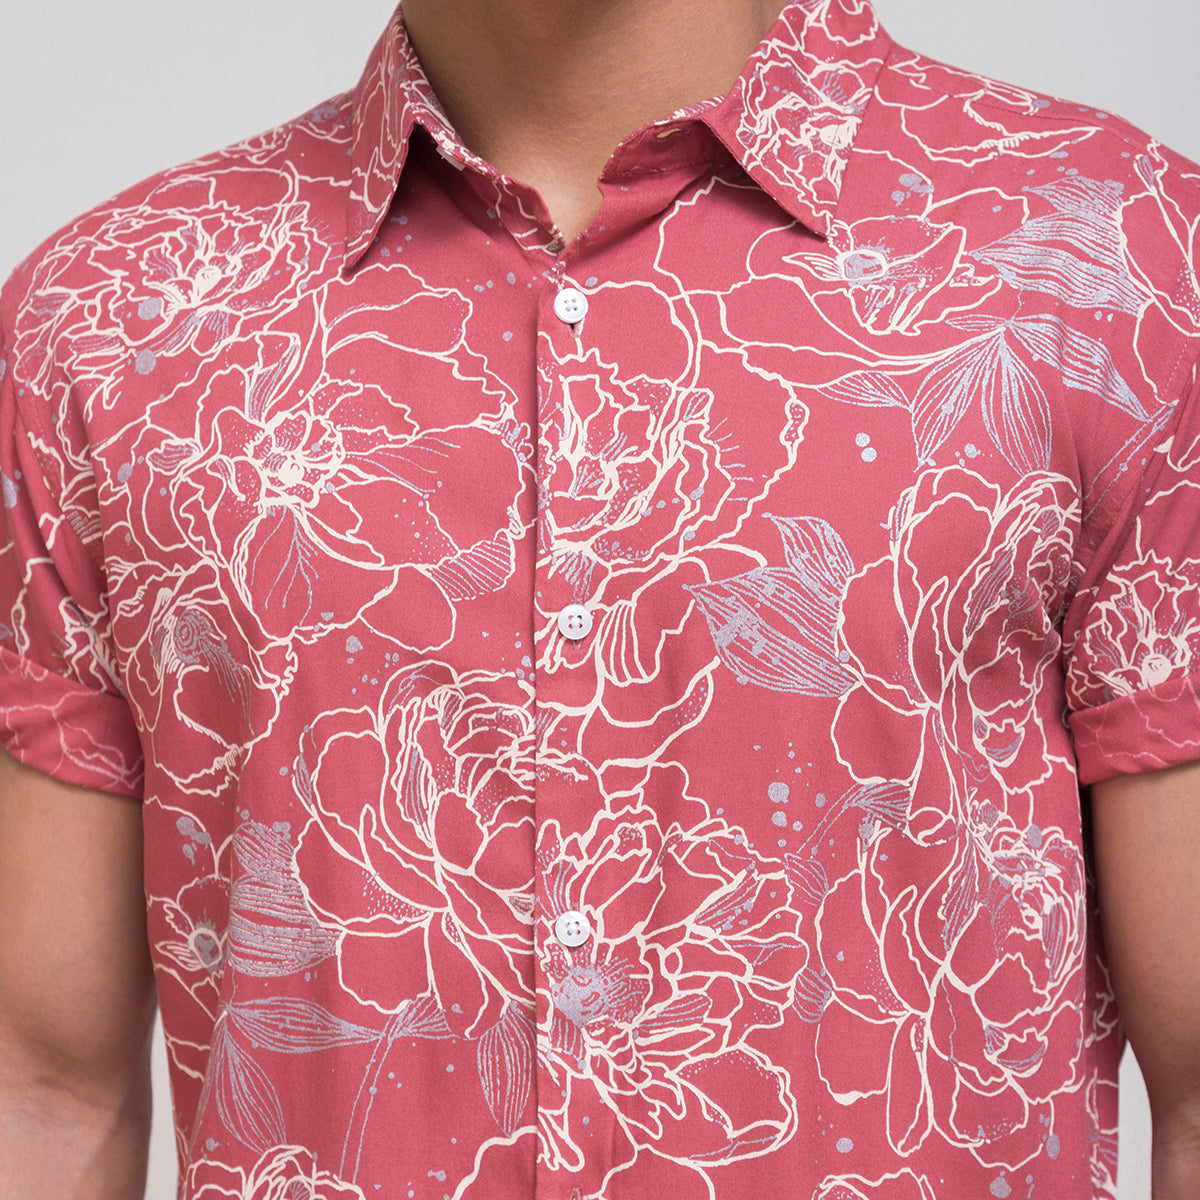 Blush pink tropical art printed shirt